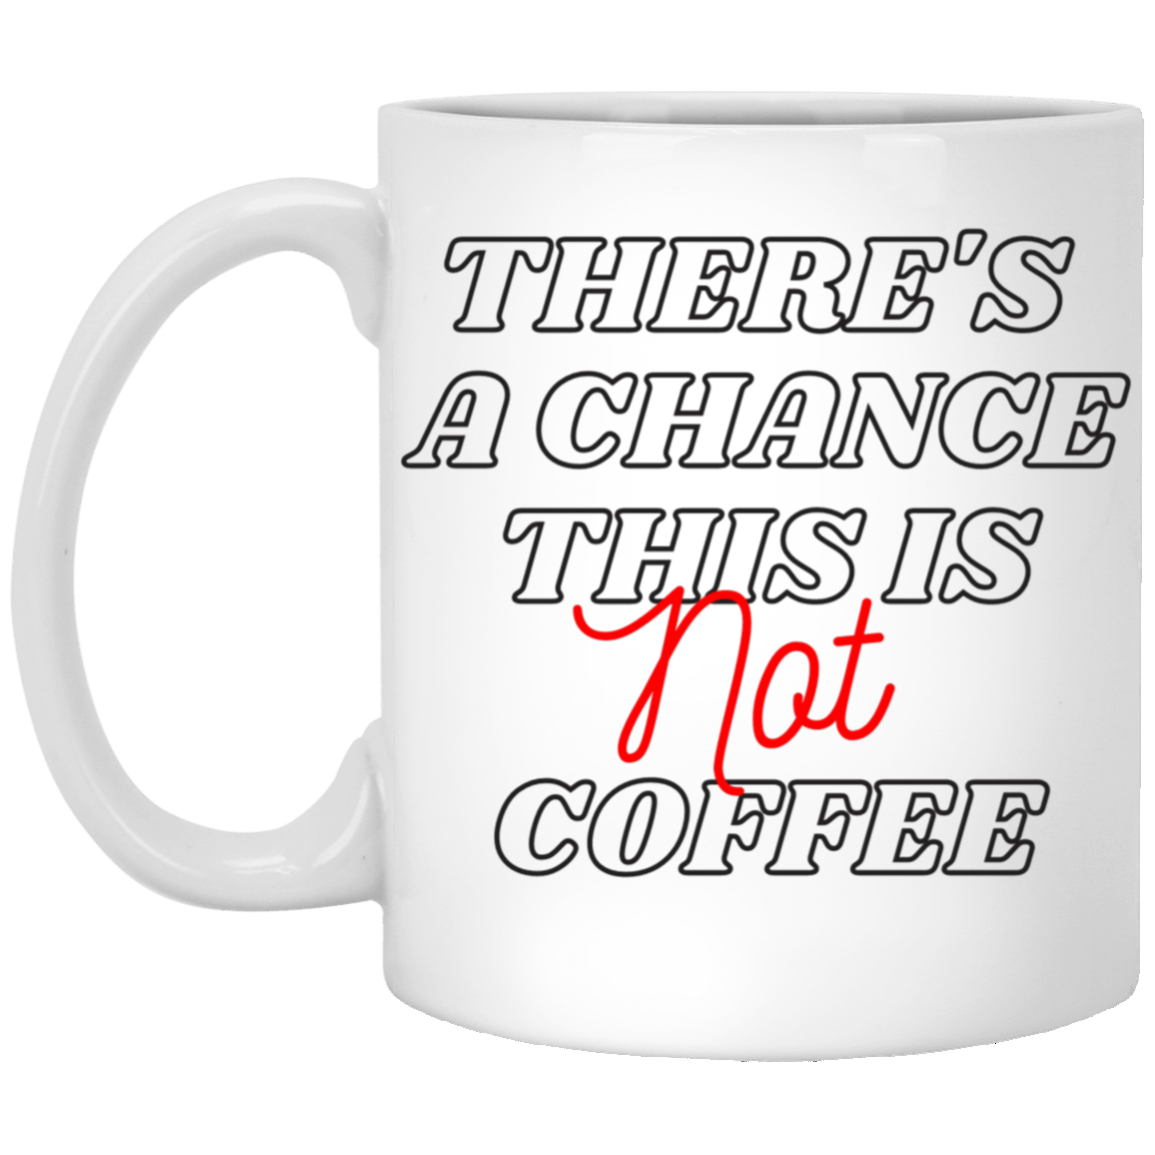 Not Coffee Mug